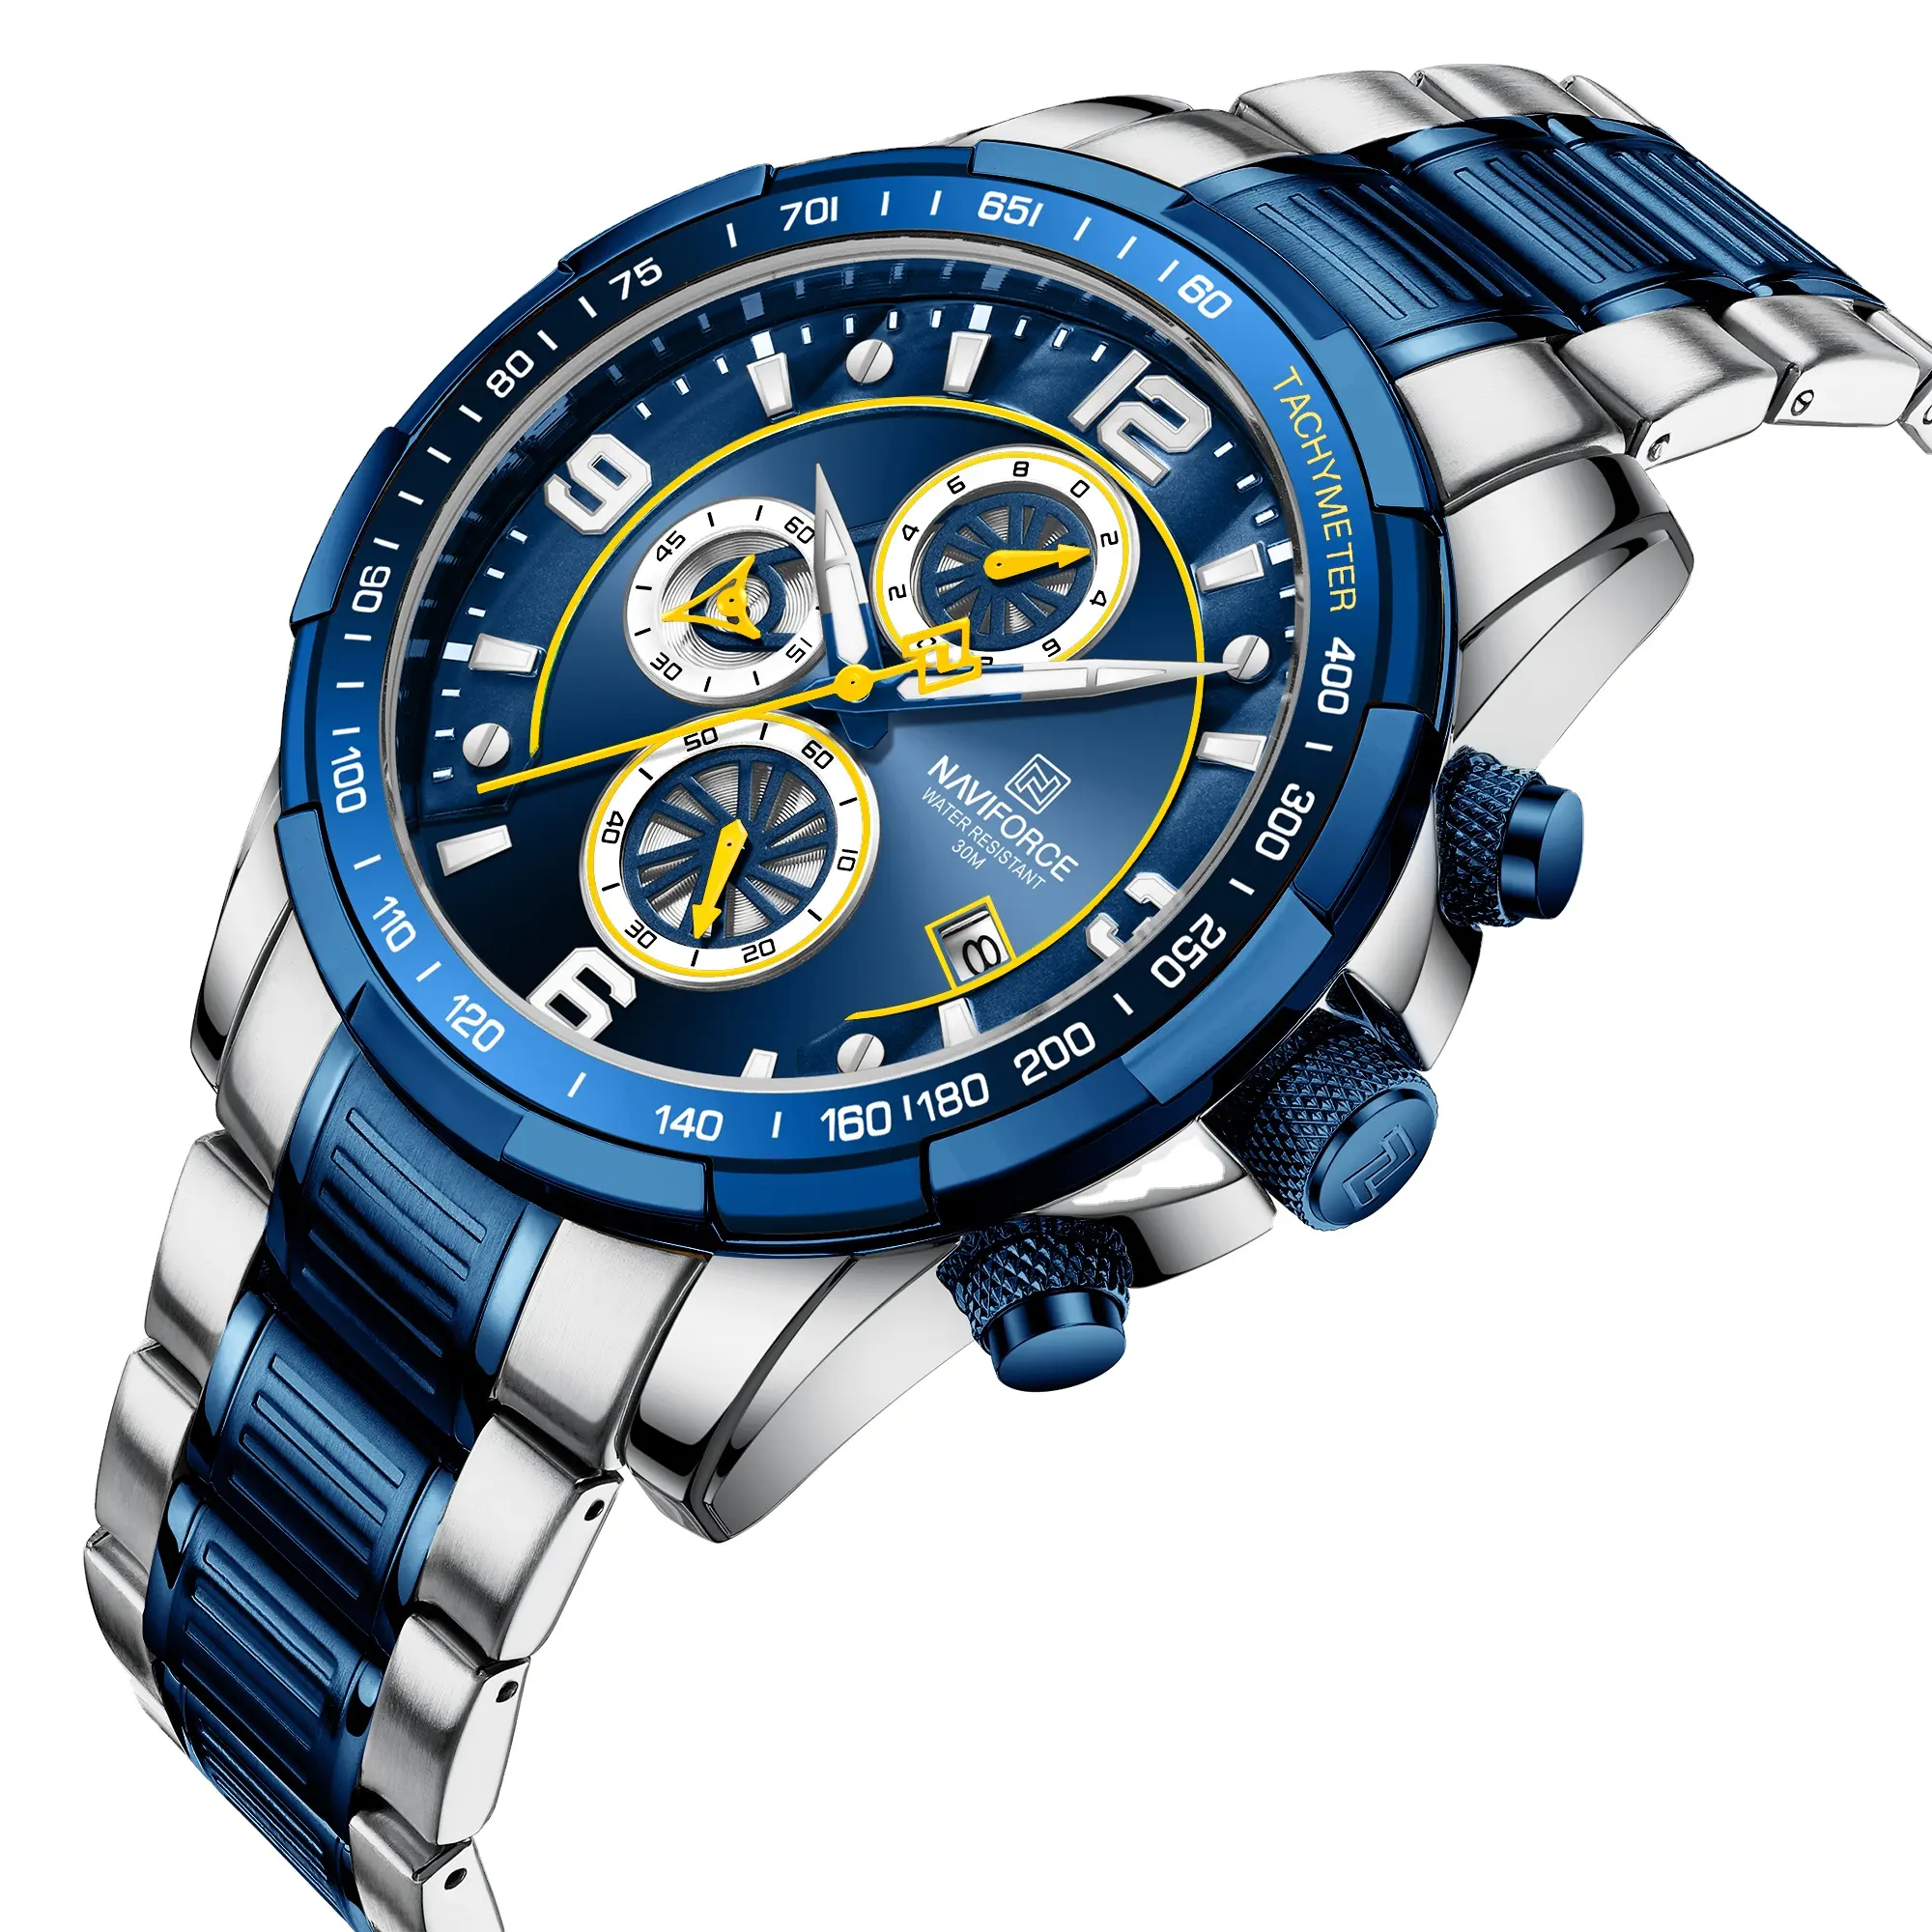 Top Brand NAVIFORCE New Men's Watch Sport Fashion Wristwatch Luxury Chronograph Stainless Steel Quartz Male Clock 8020